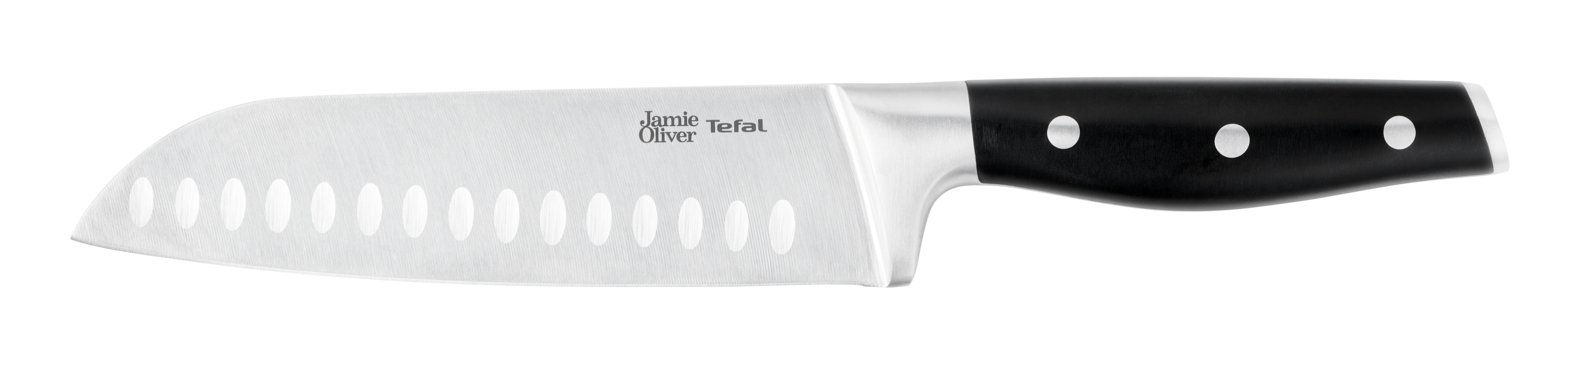 Нож сантоку Jamie Oliver 18 см K2671844 универсальный нож jamie oliver 20 cм k2670244